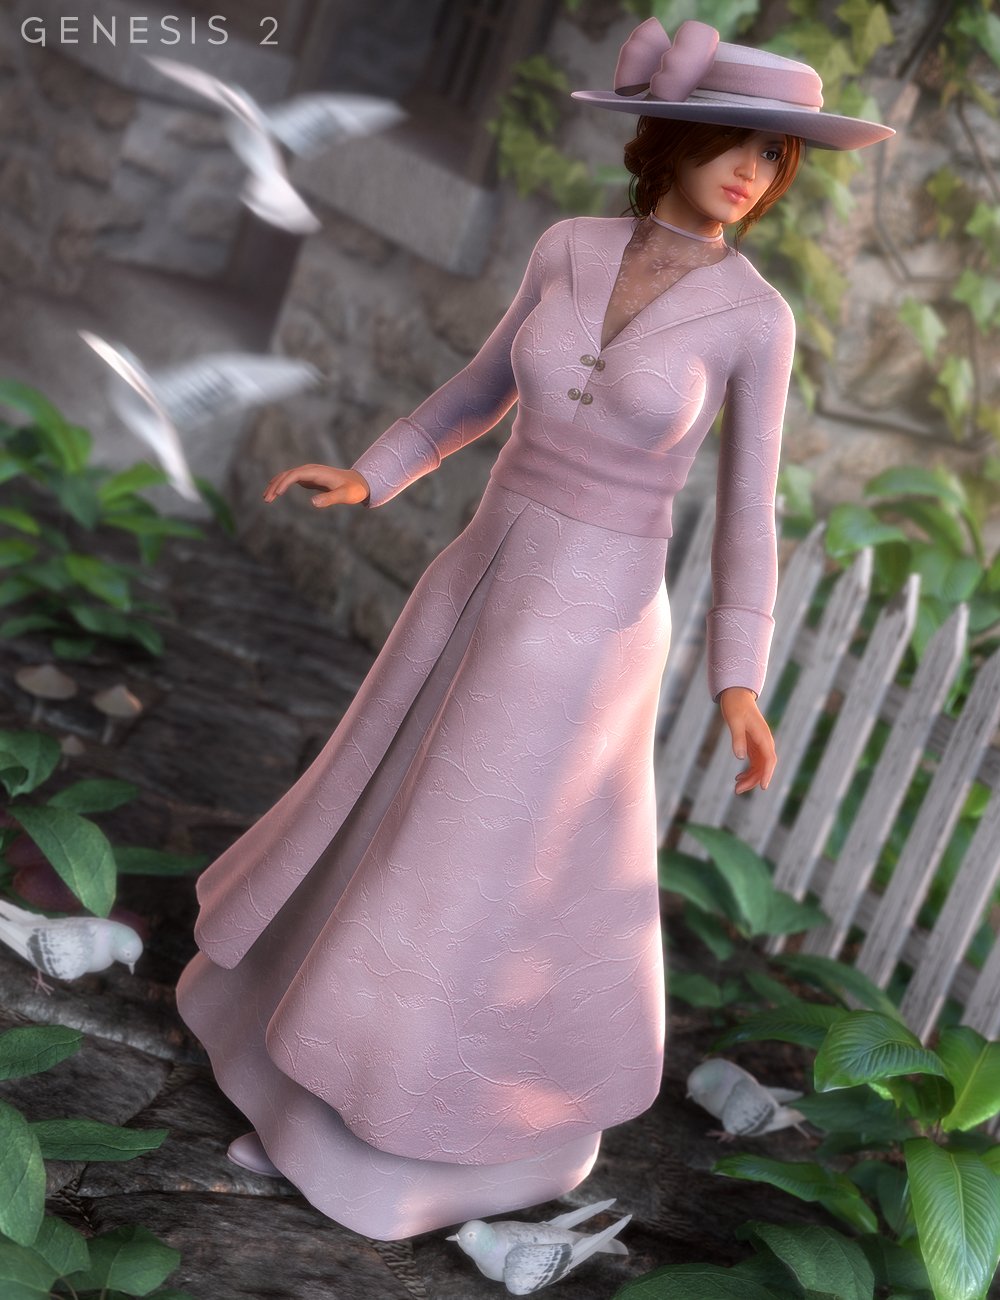 Edwardian Suit for Genesis 2 Female(s) by: Ravenhair, 3D Models by Daz 3D